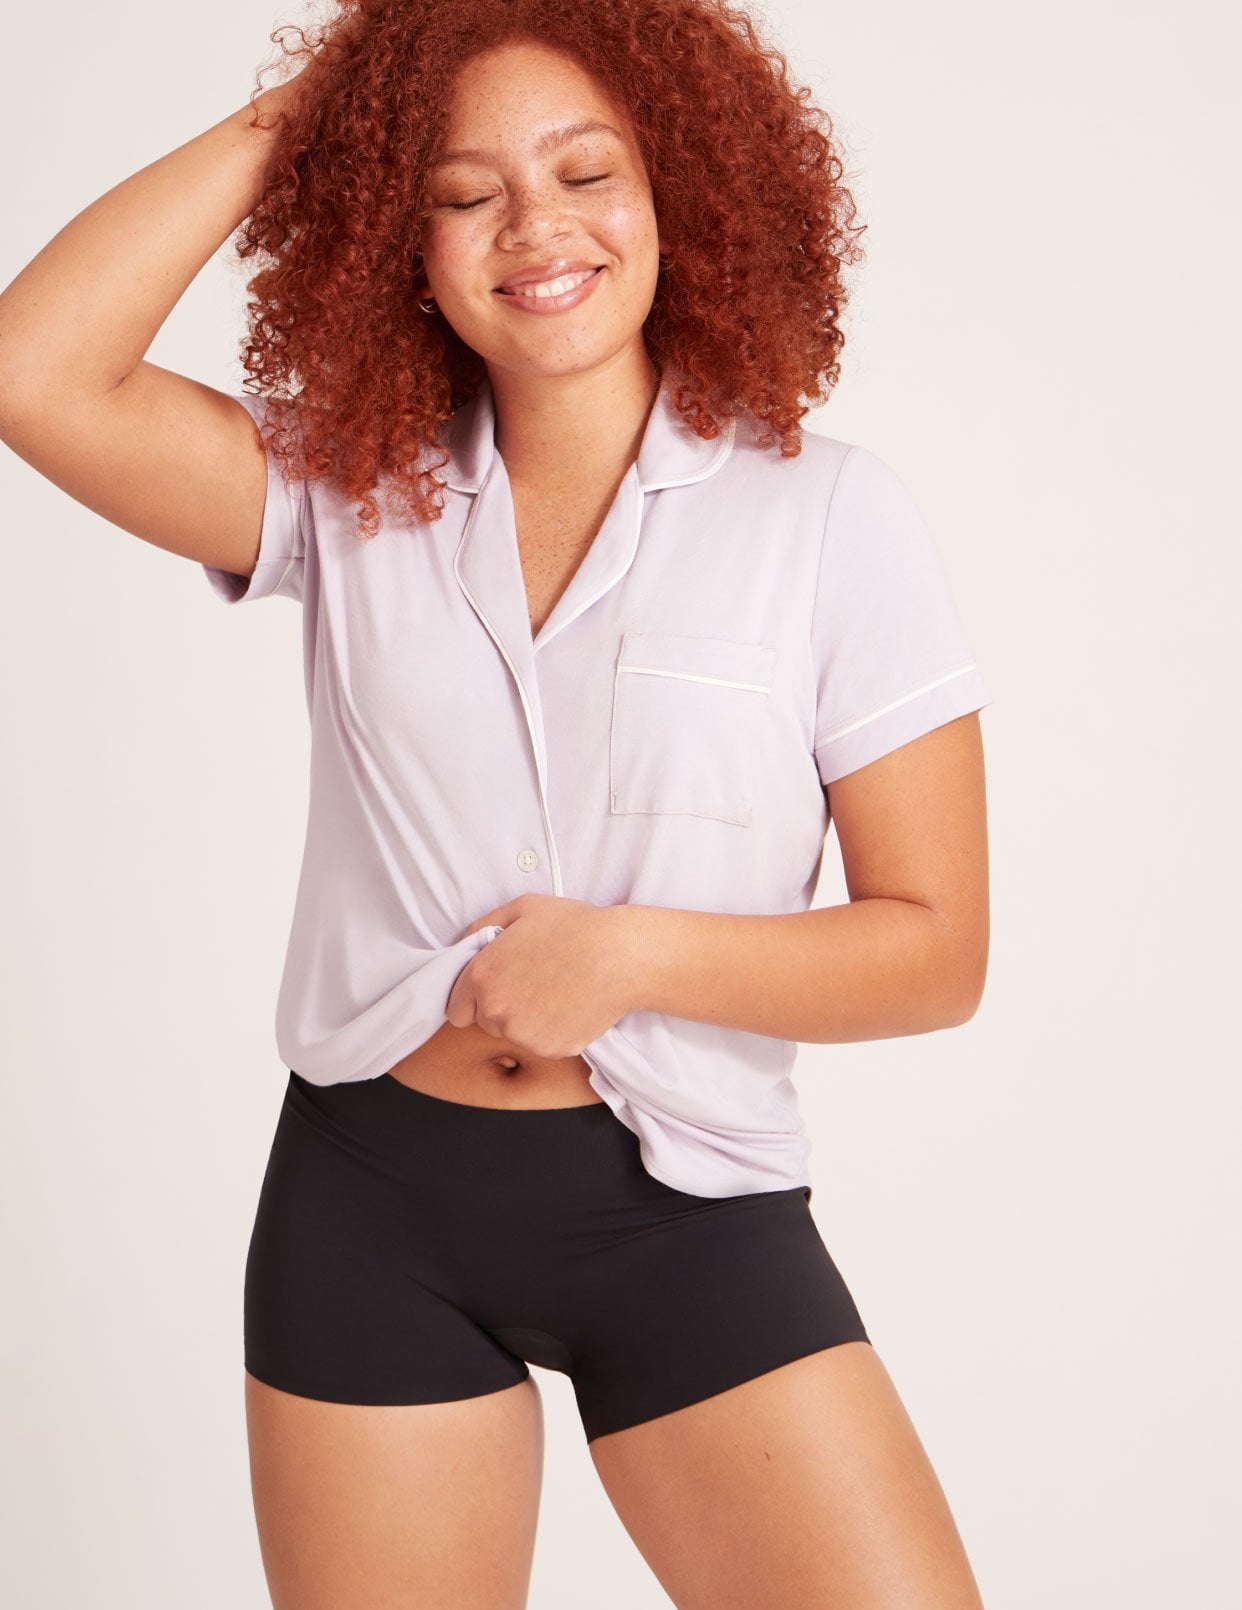 Women's Period Underwear - Hipster, Classic Ruby